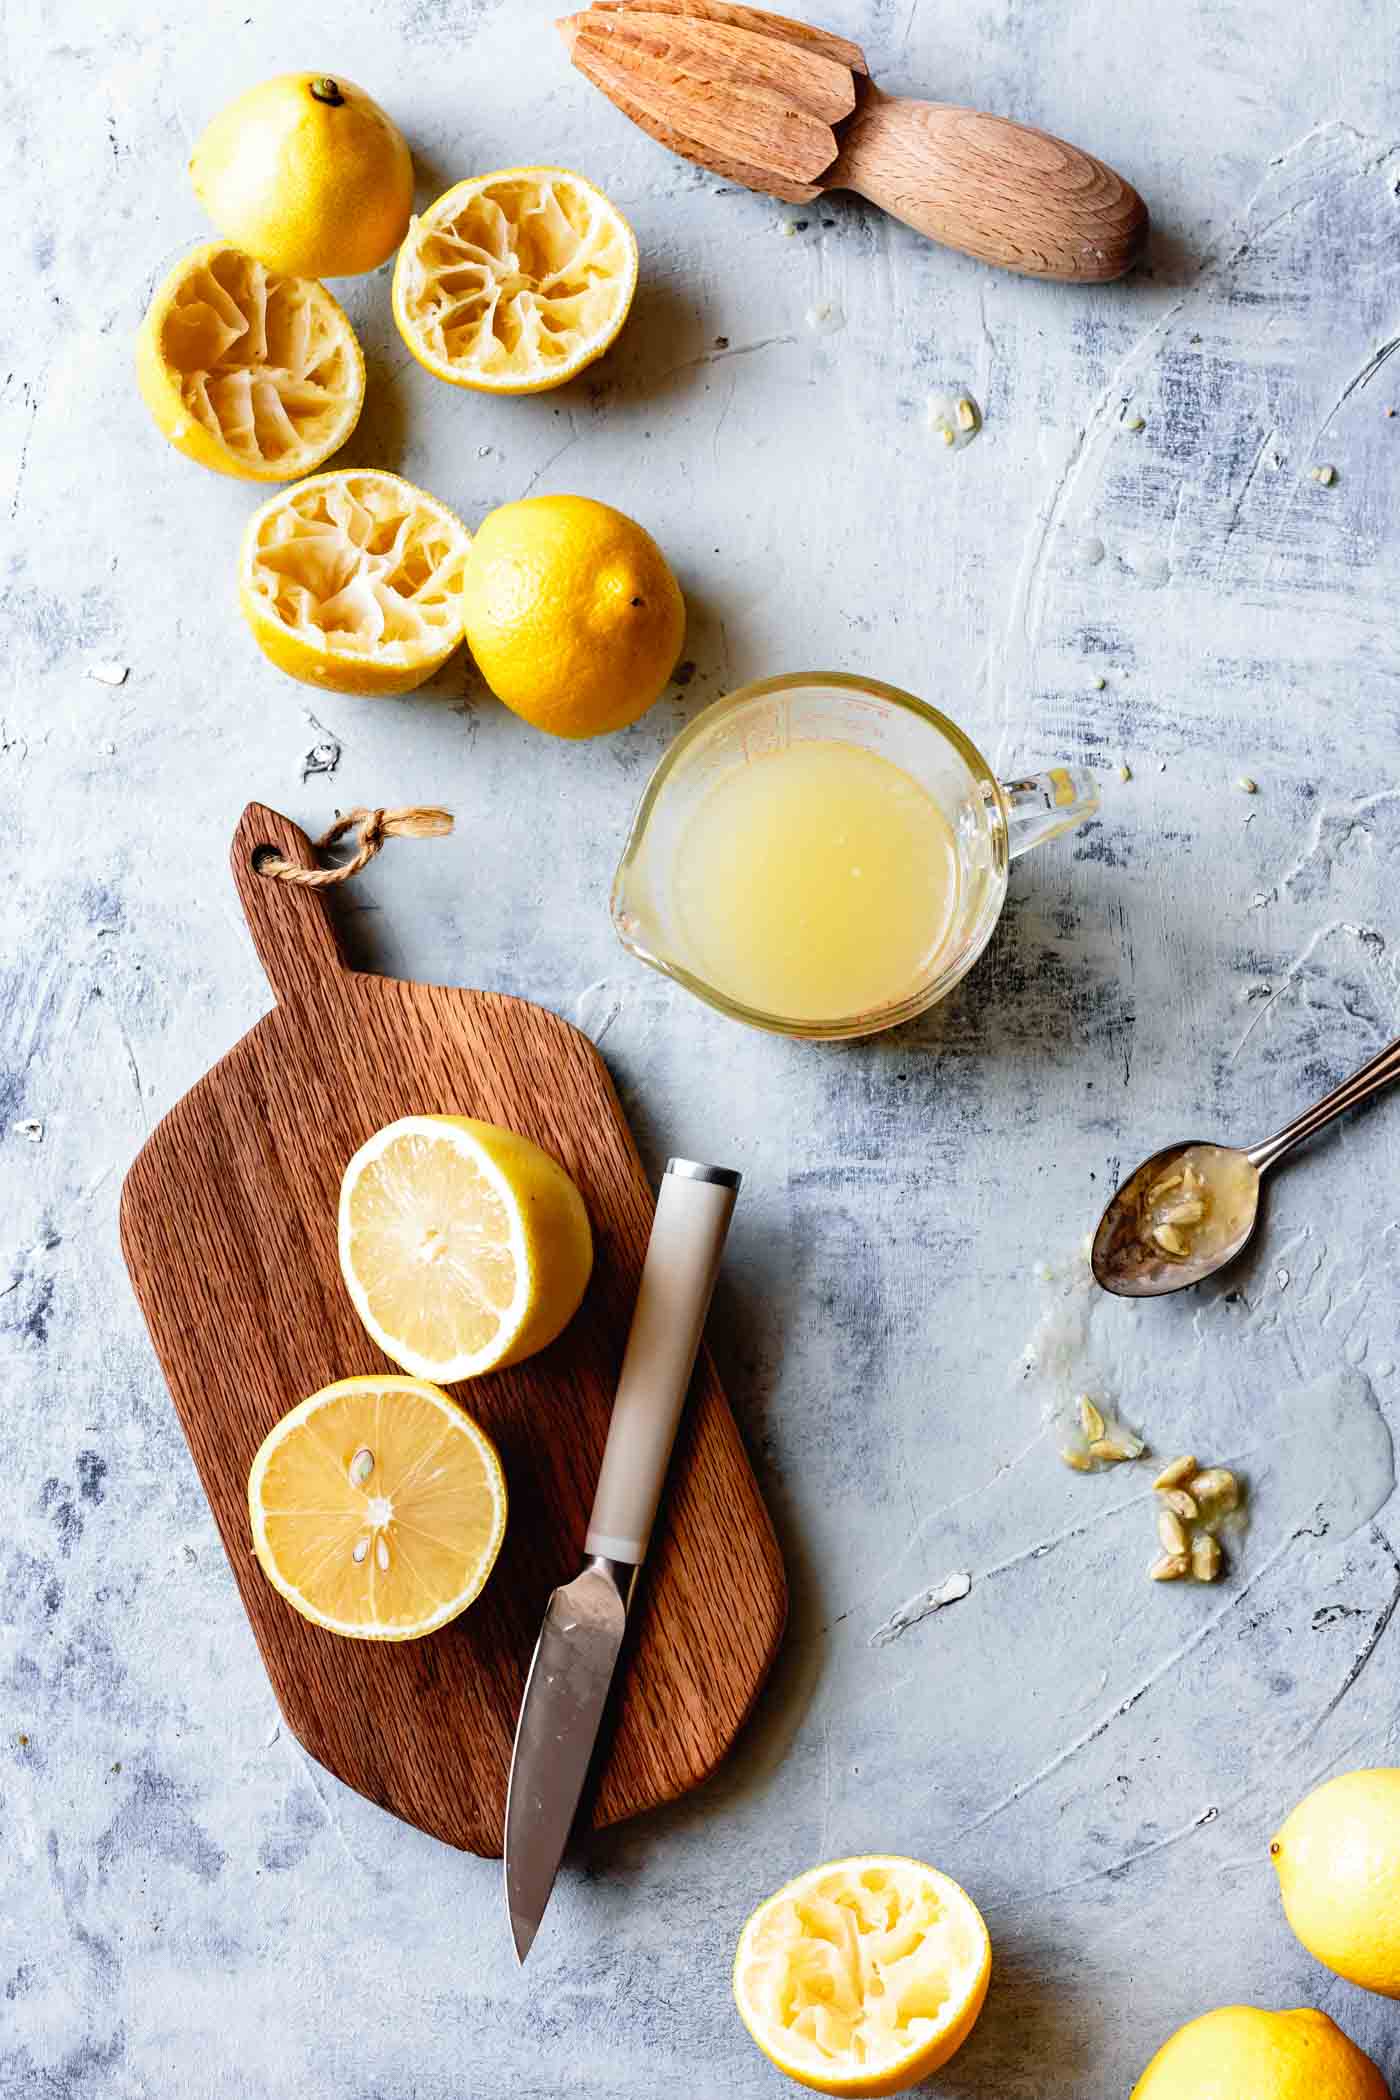 juicing lemons for gluten-free lemon squares recipe